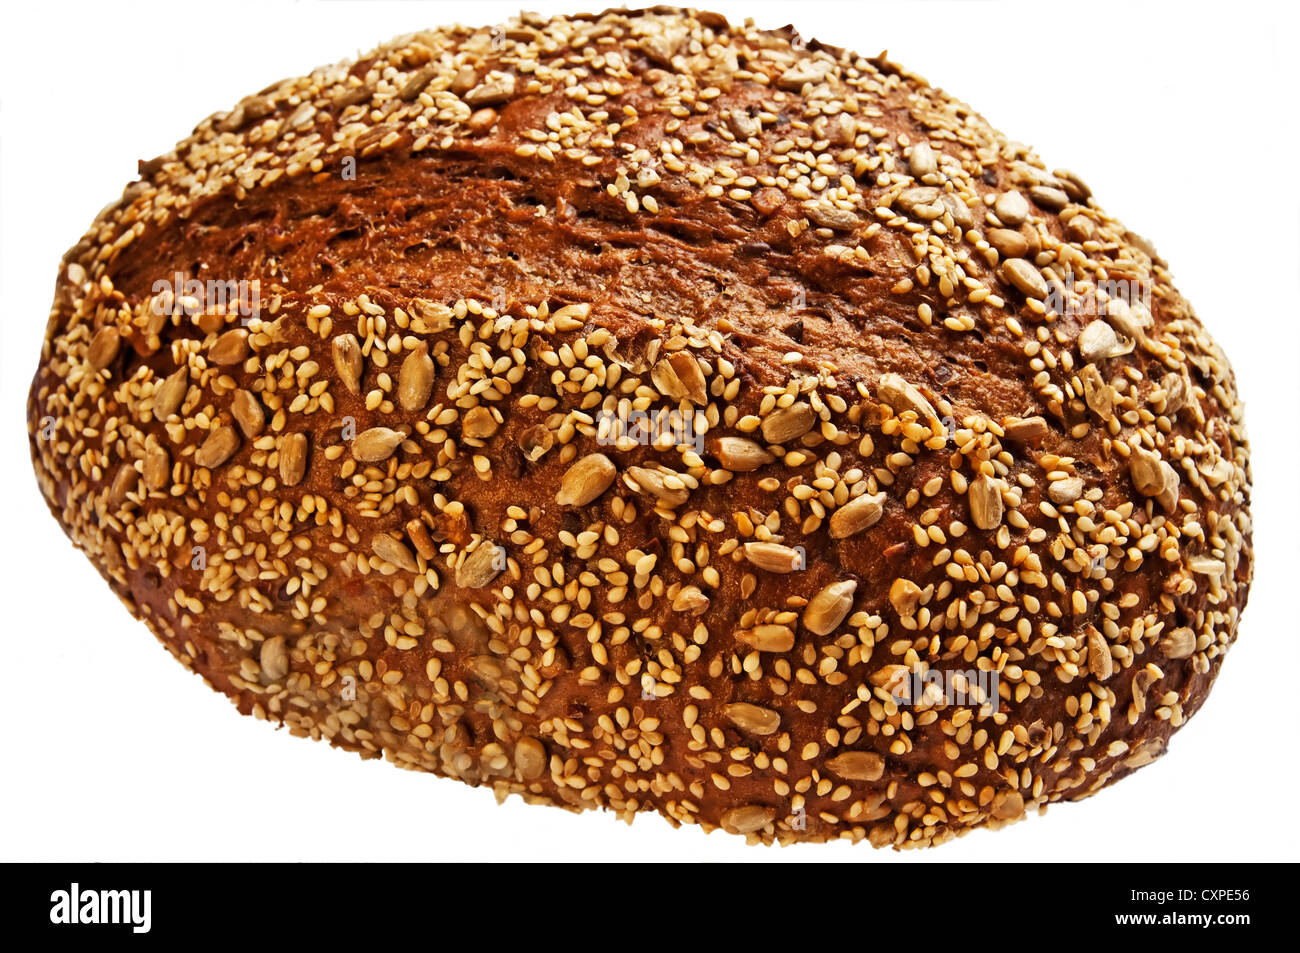 German whole grain bread Stock Photo